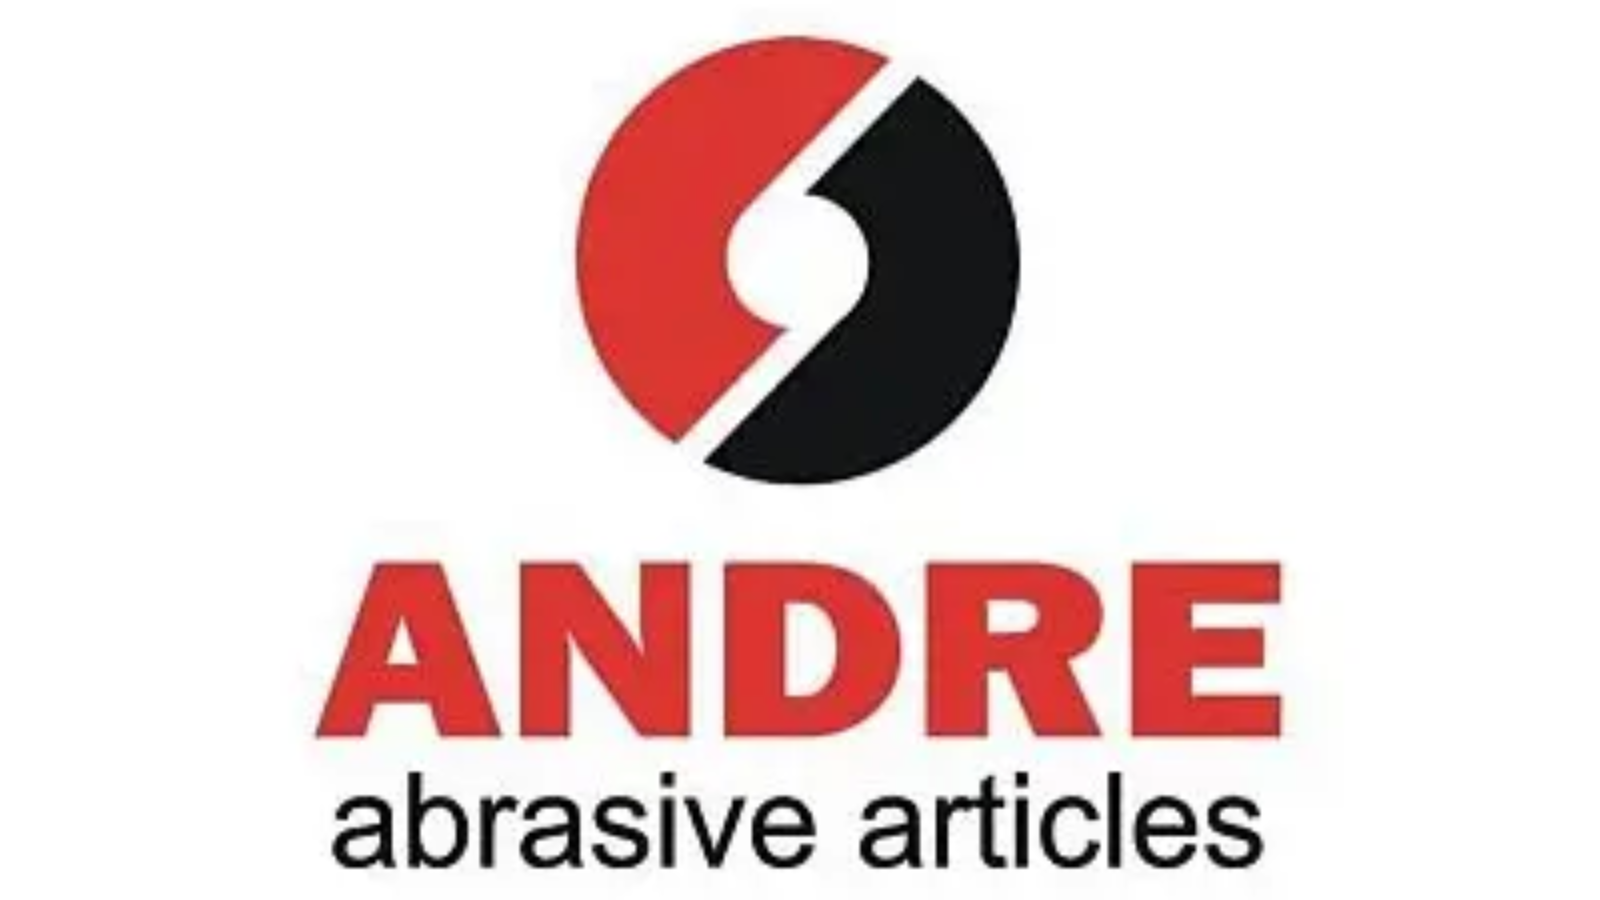 Andre_abrasive_articles_logo